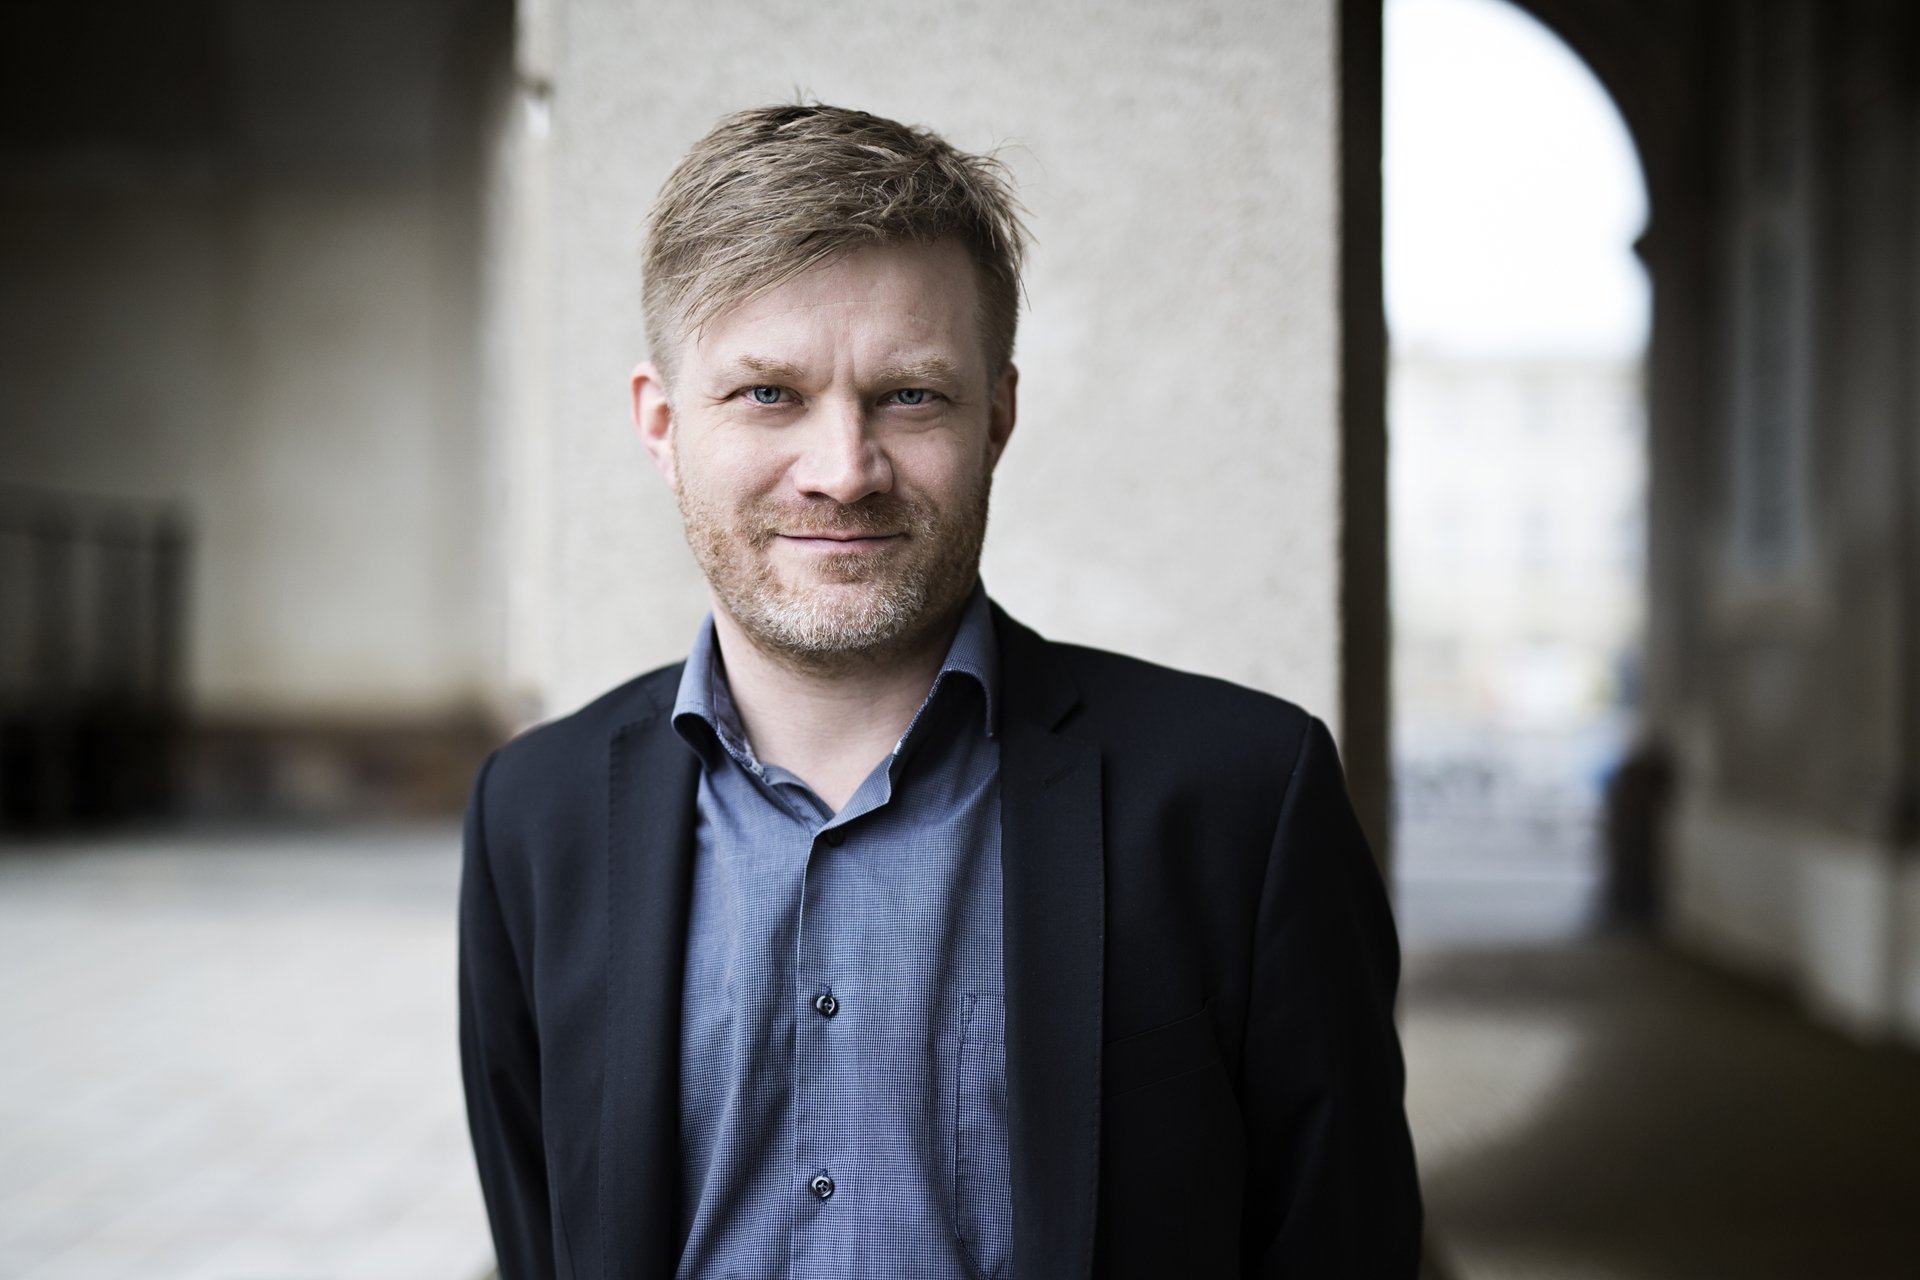 Janus Sandsgaard, Head of Digital Policy at Dansk Erhverv, The Danish Chamber of Commerce.